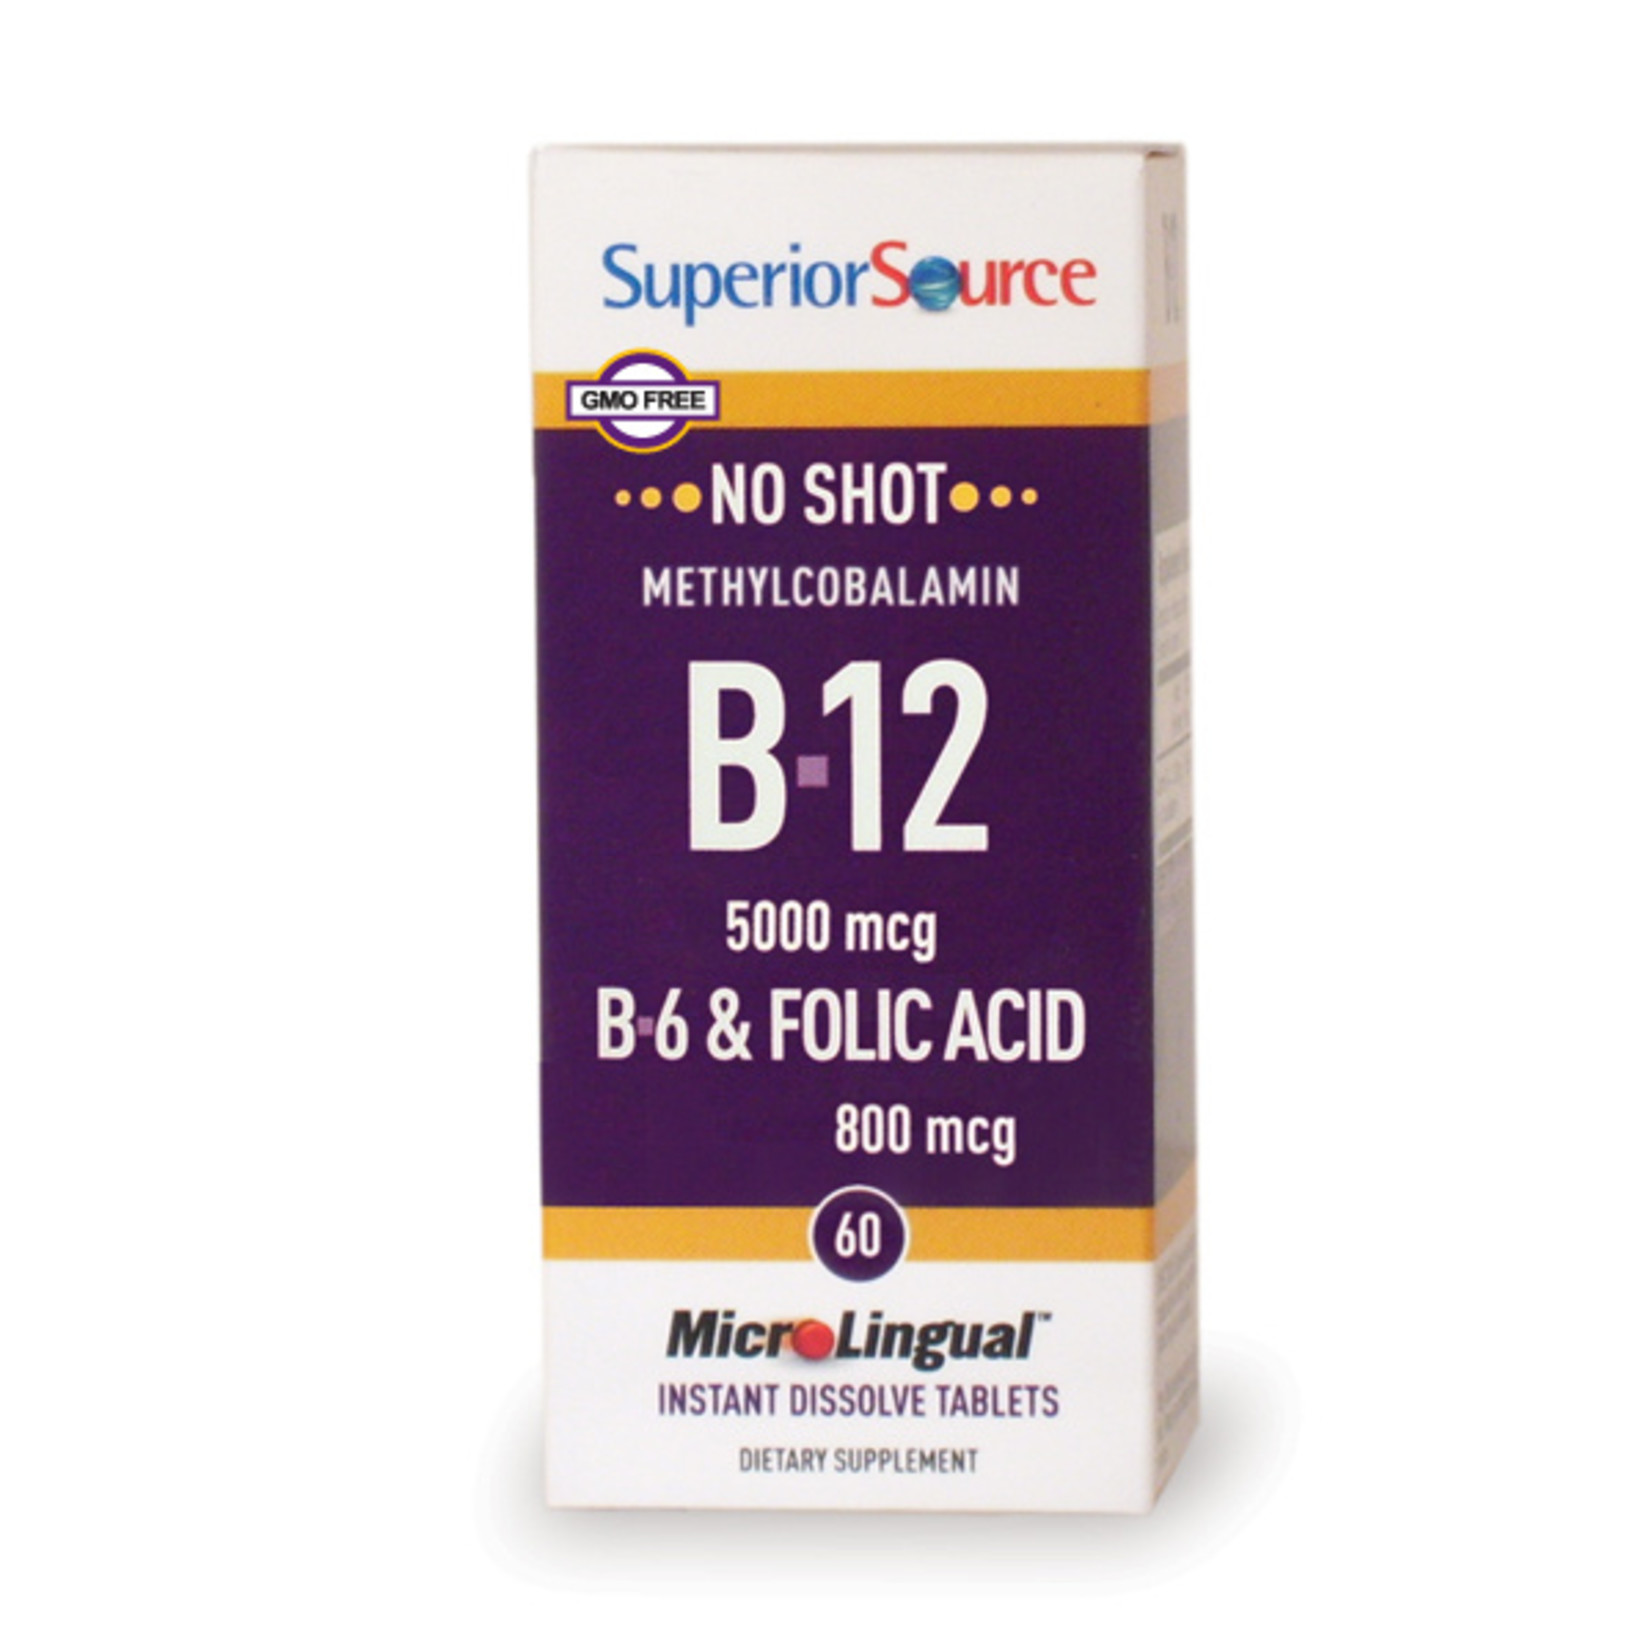 Superior Source Superior Source - Methylcobalamin B-12 5000 mcg B-6 & Folic Acid 800 mcg - 60 Tablets